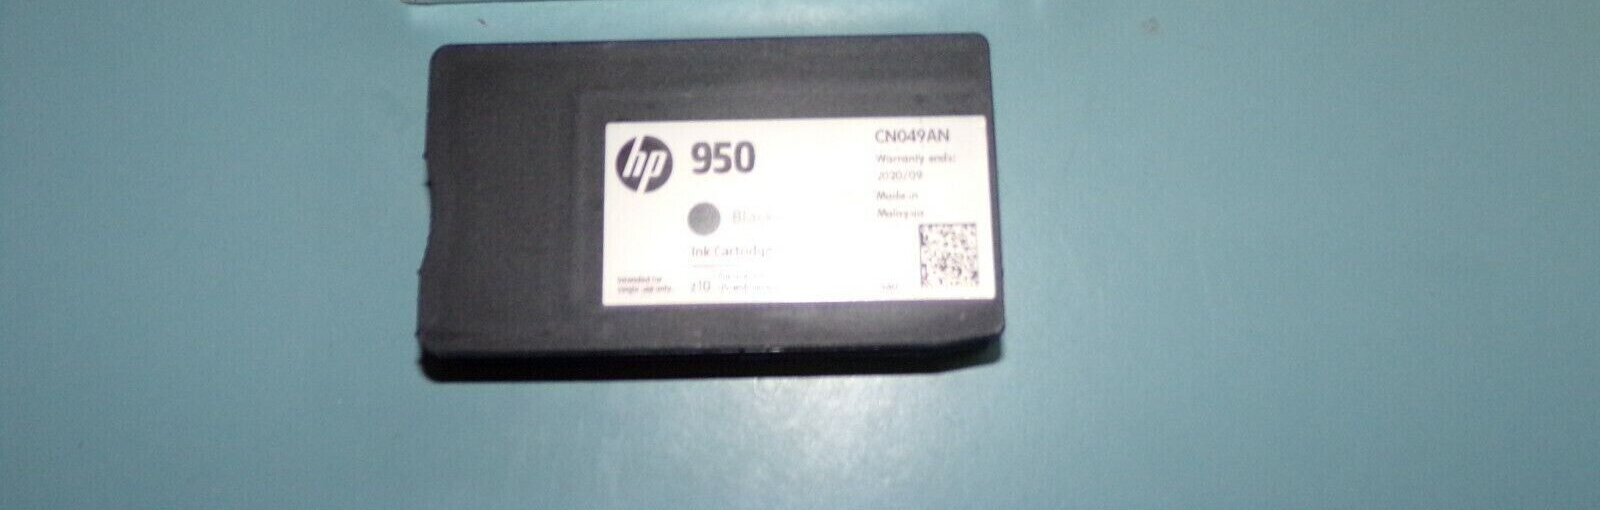 Primary image for 950 HP BLACK ink cartridge OfficeJet 8600 Pro 8630 8625 8620 8615 8610 printer